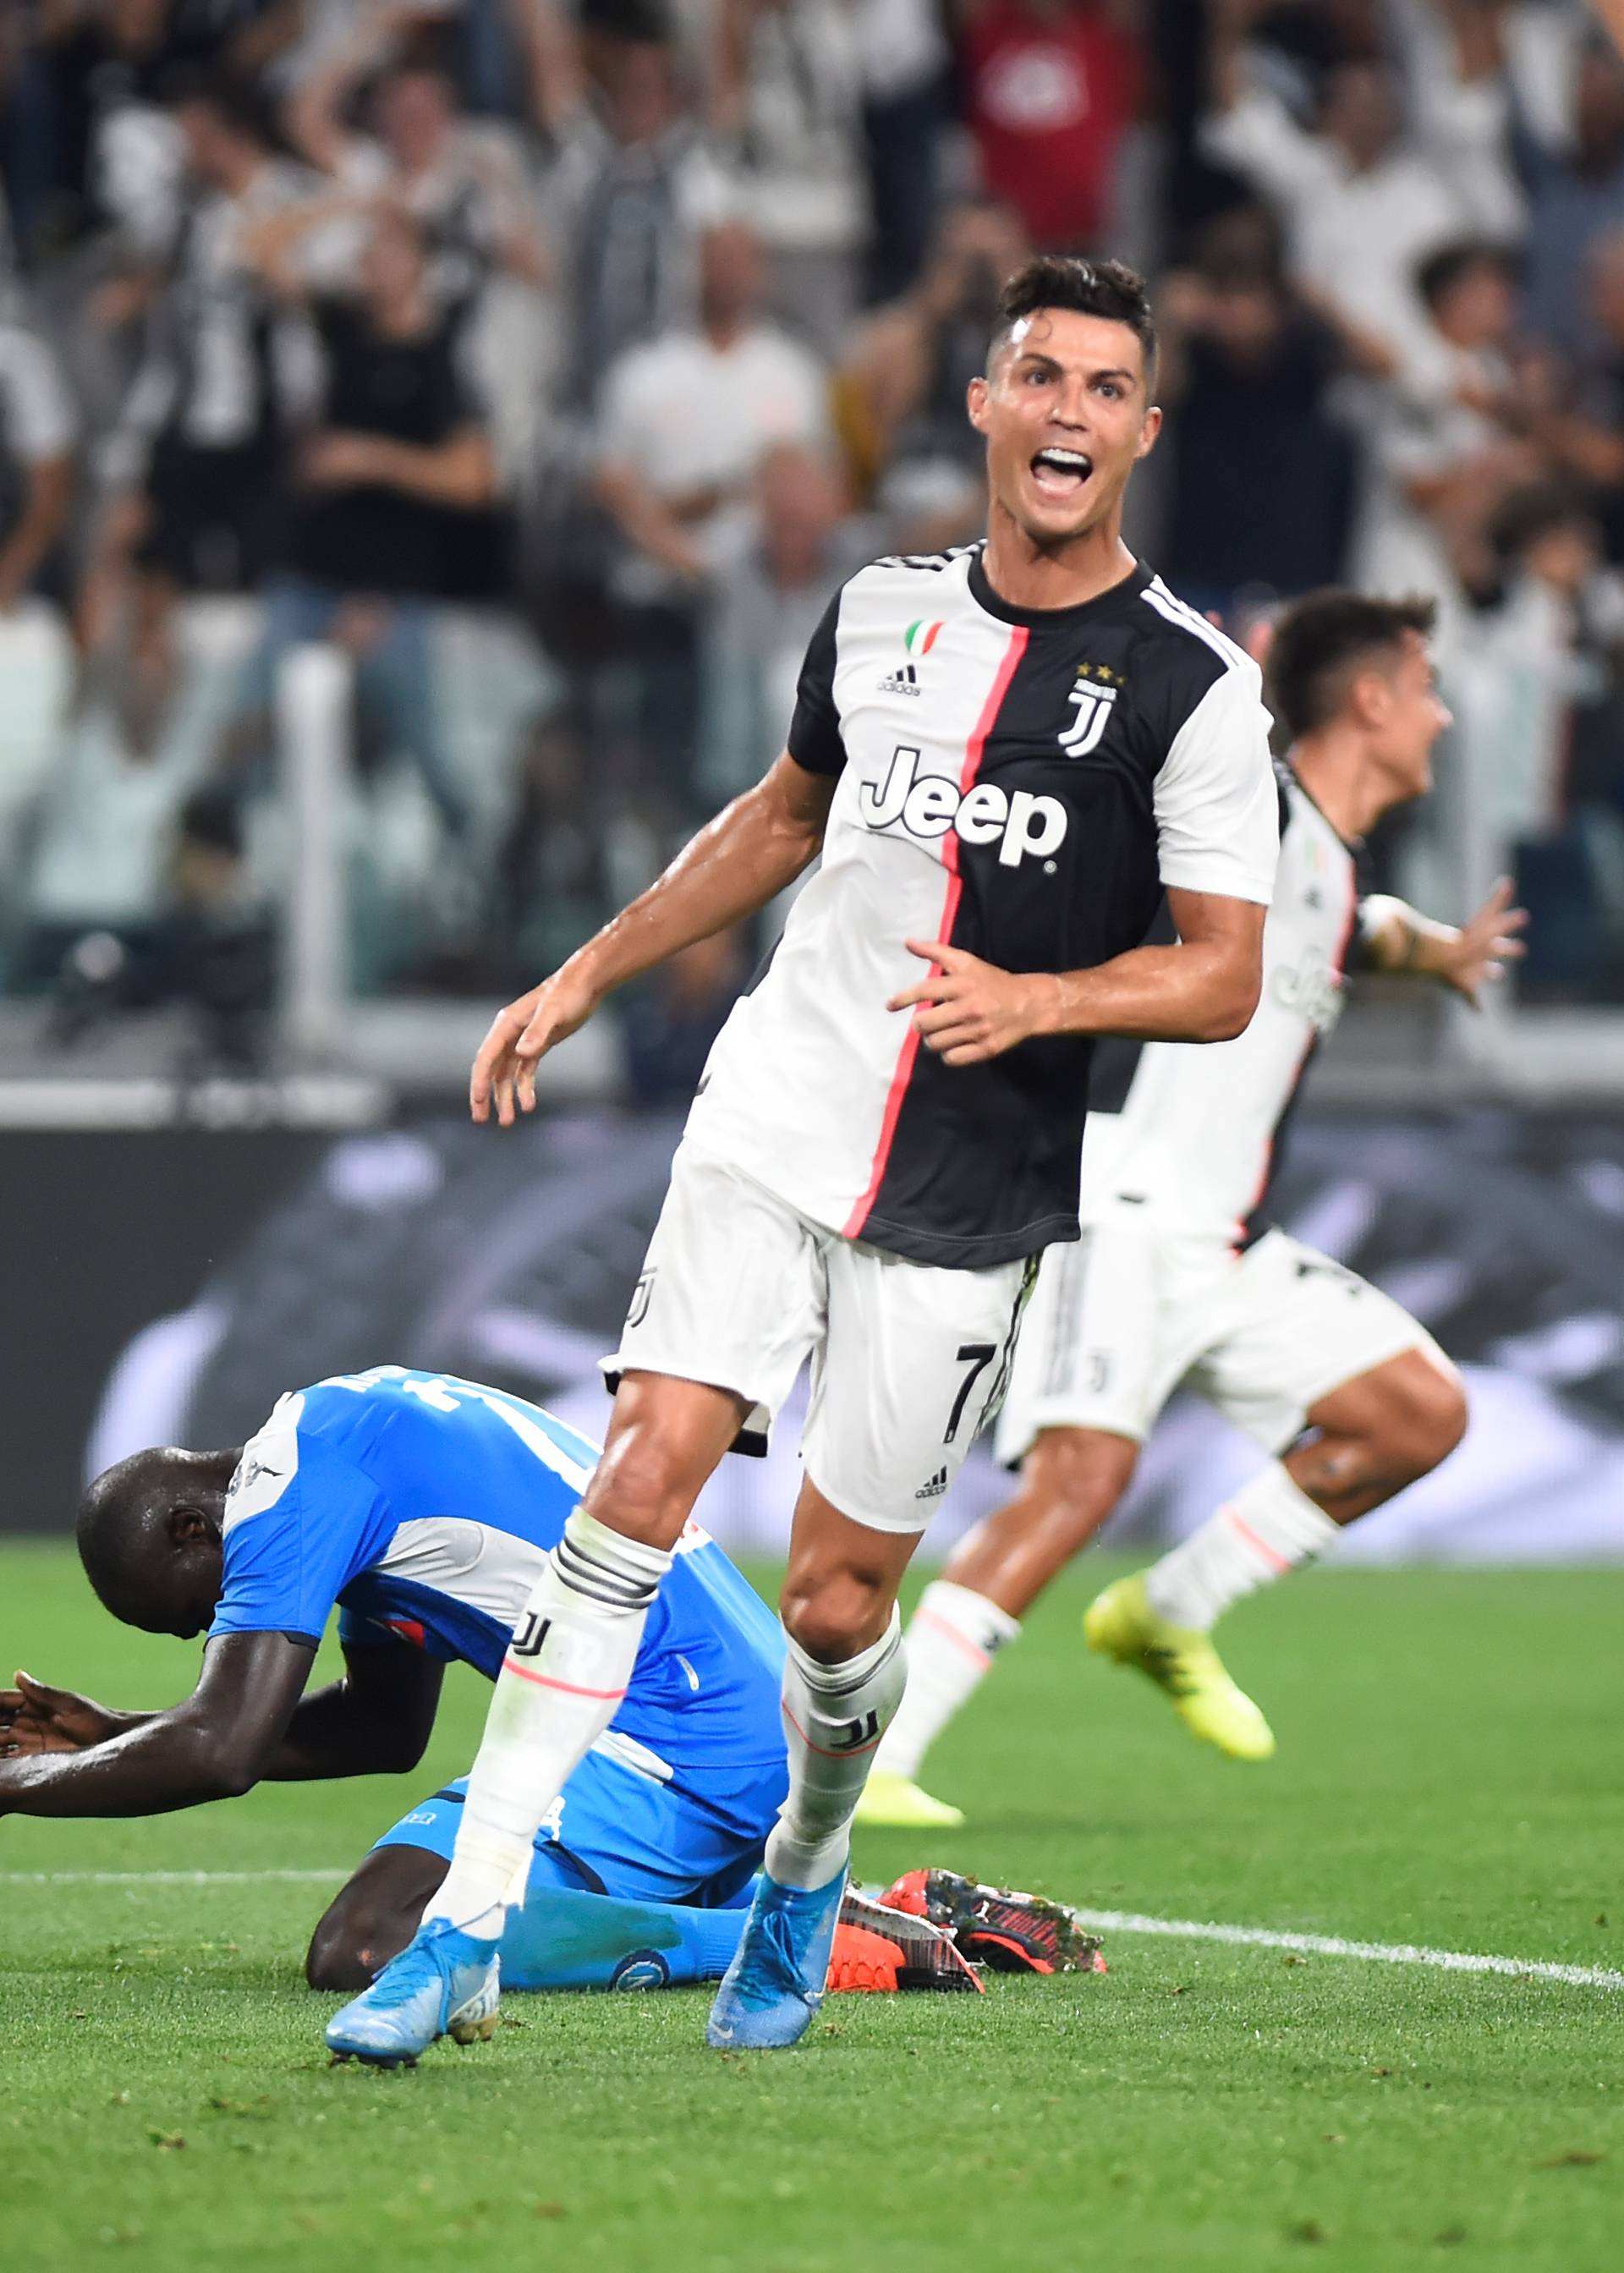 Serie A - Juventus v Napoli